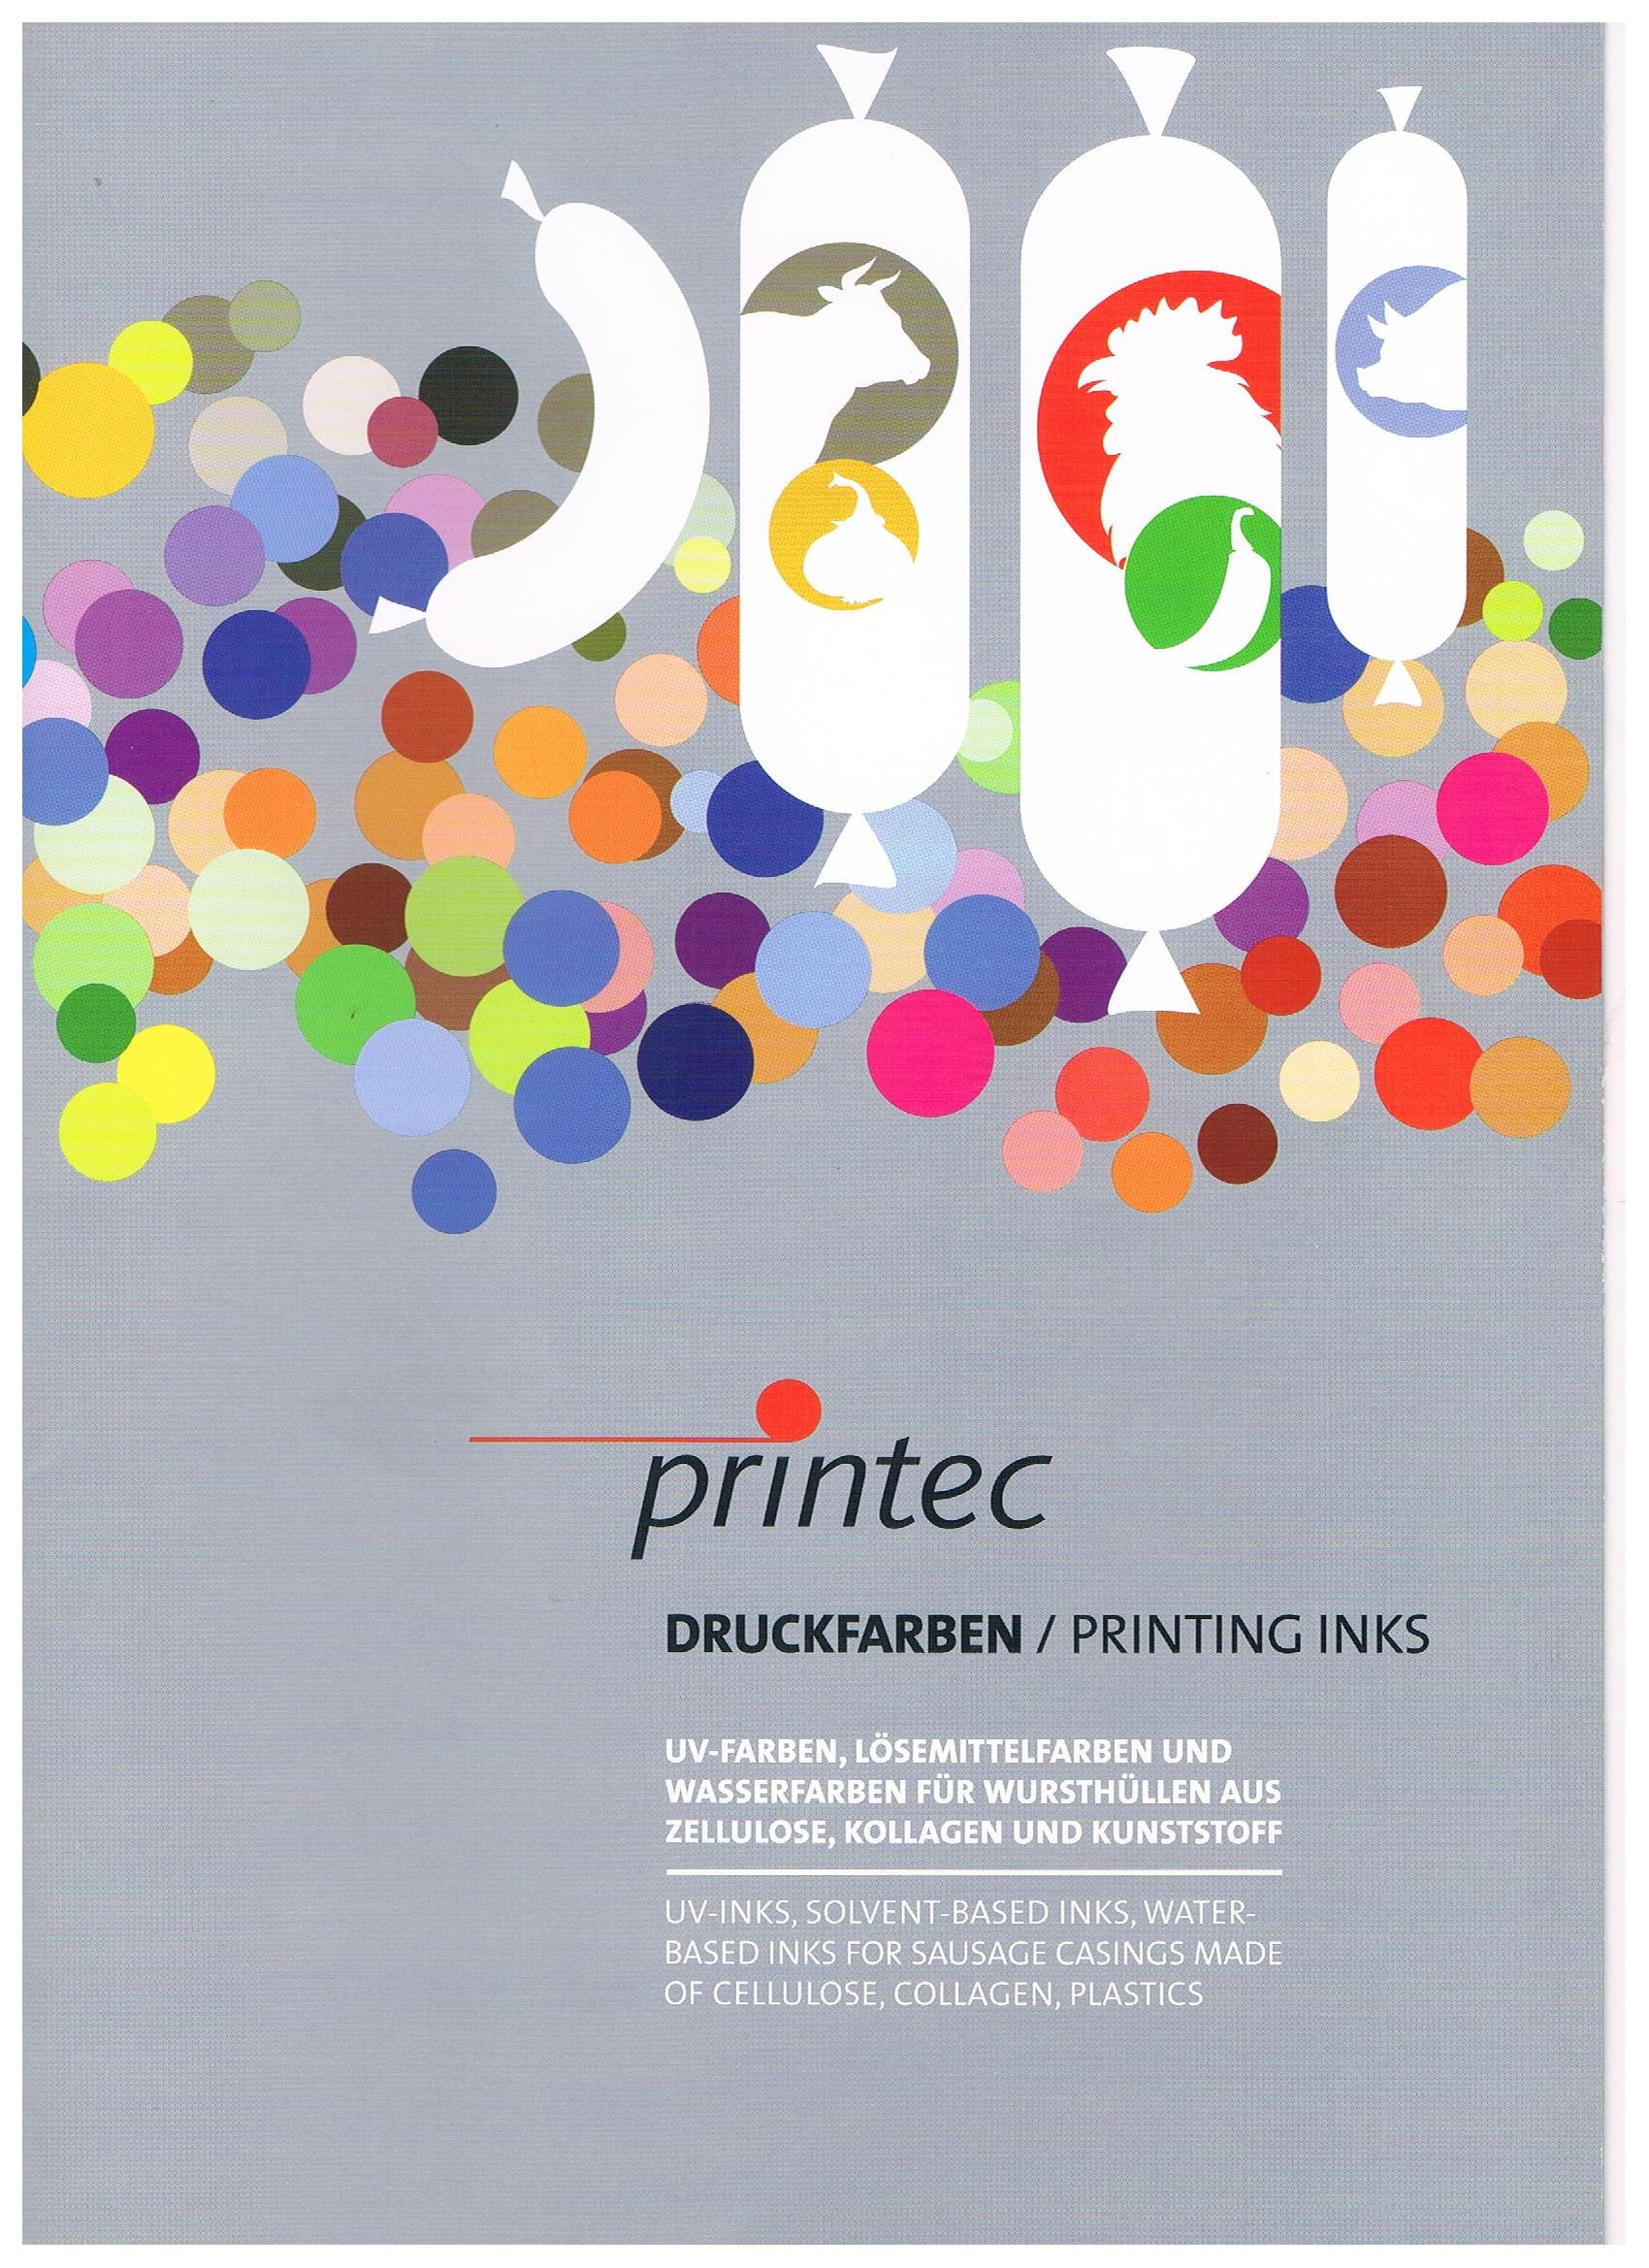 printec ausage casing printing inks